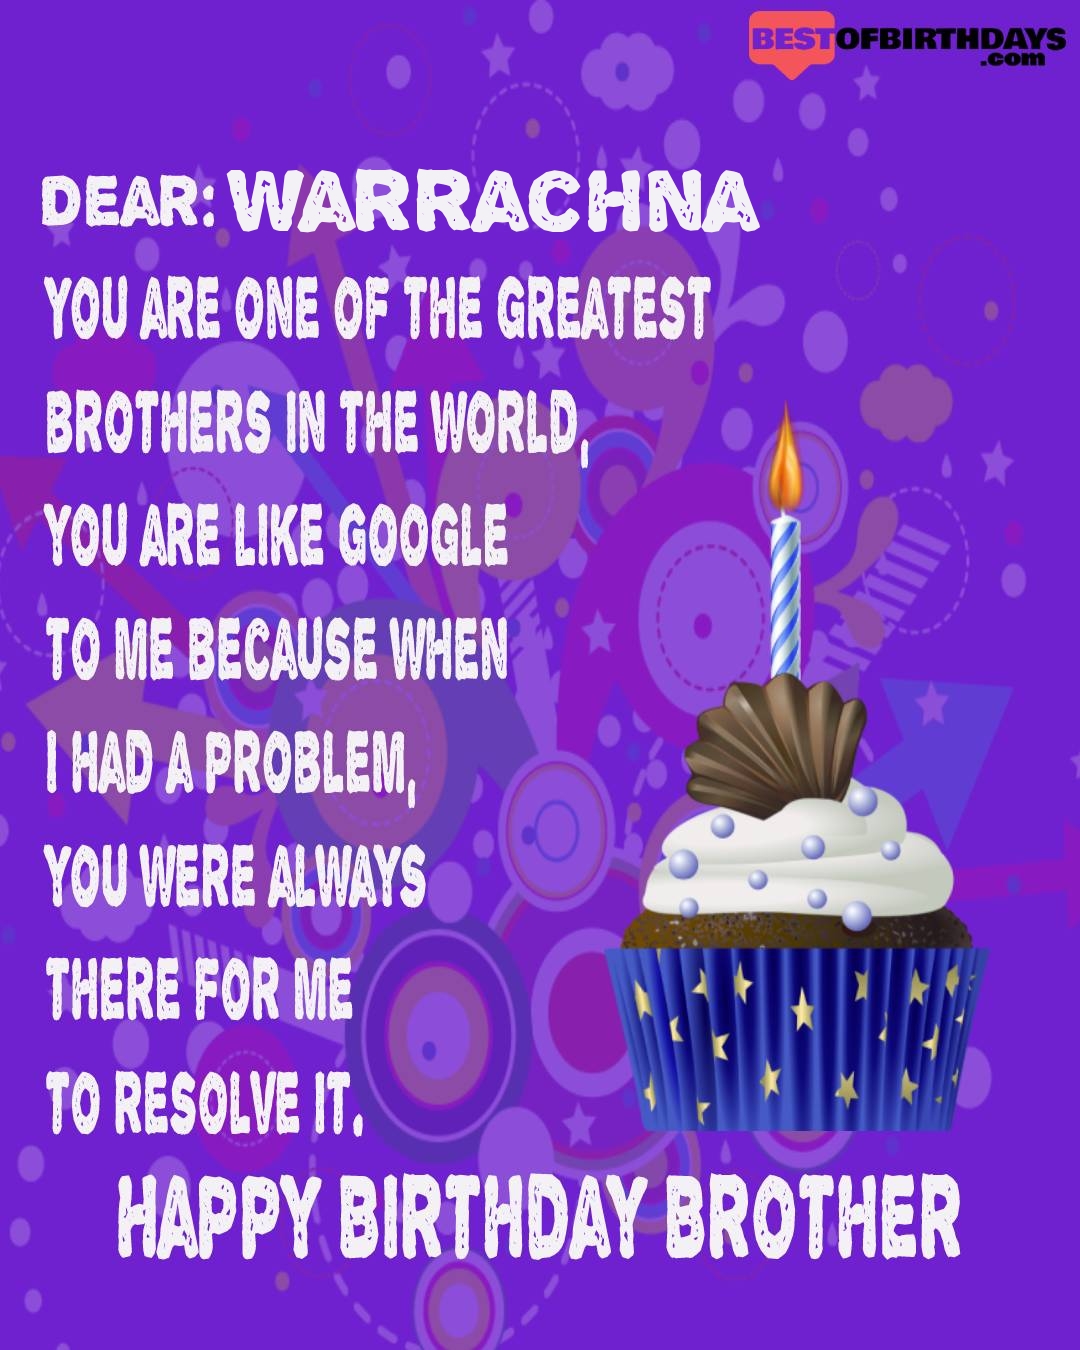 Happy birthday warrachna bhai brother bro